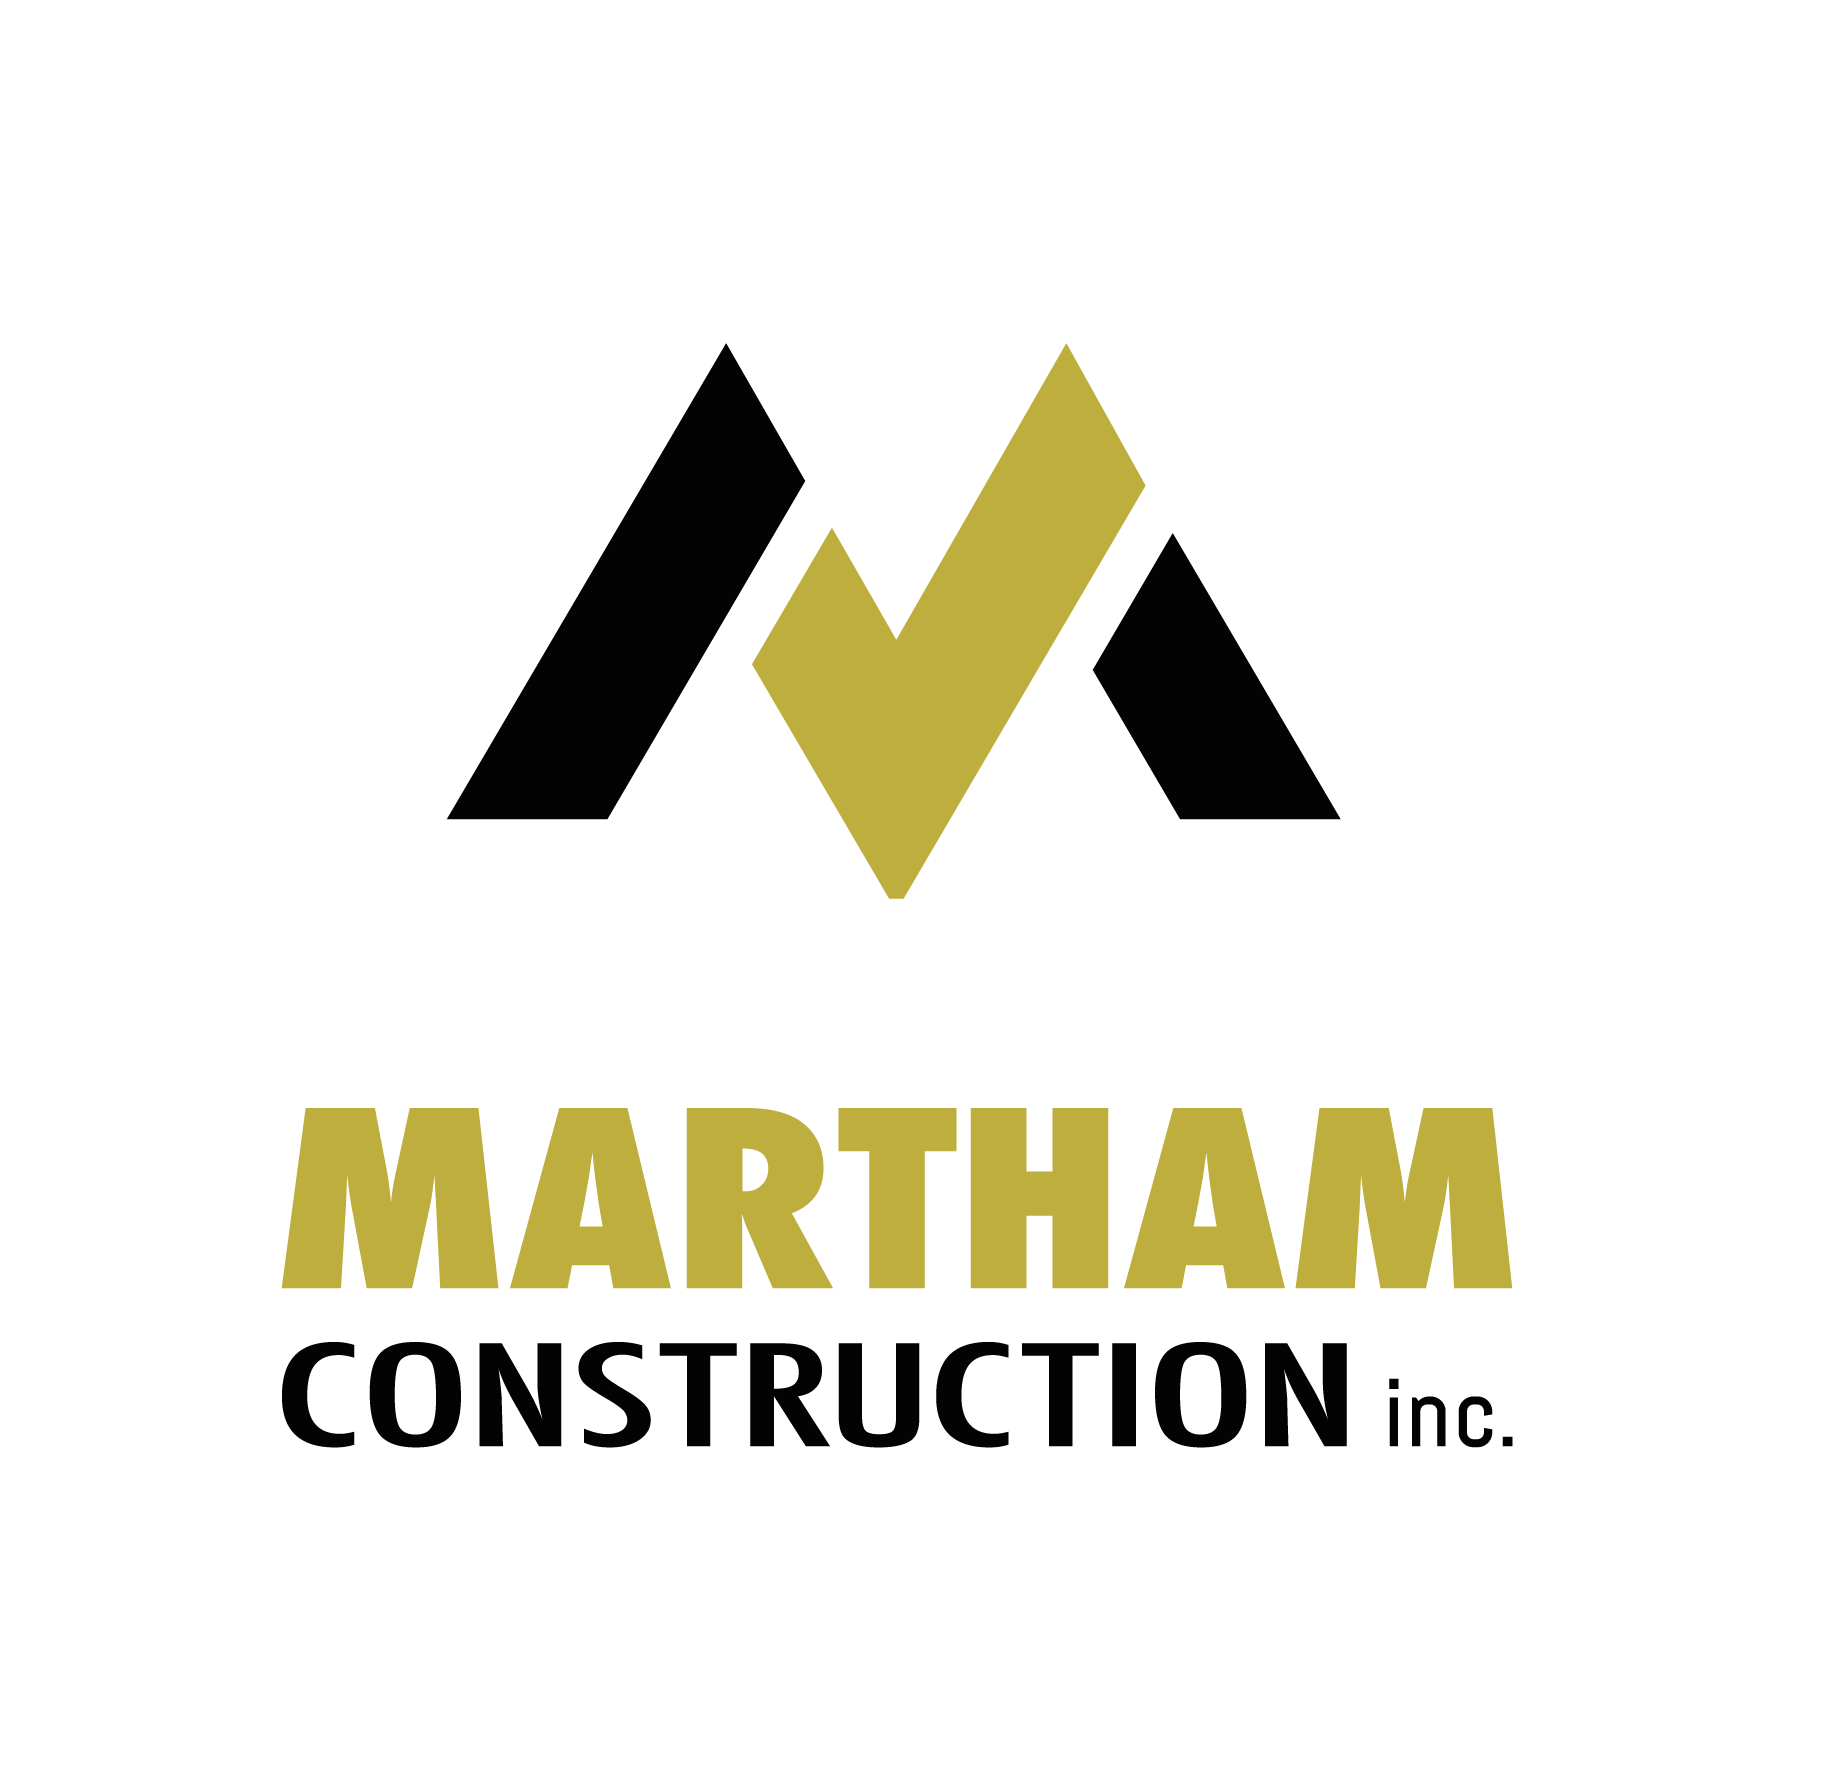 Martham Construction inc.